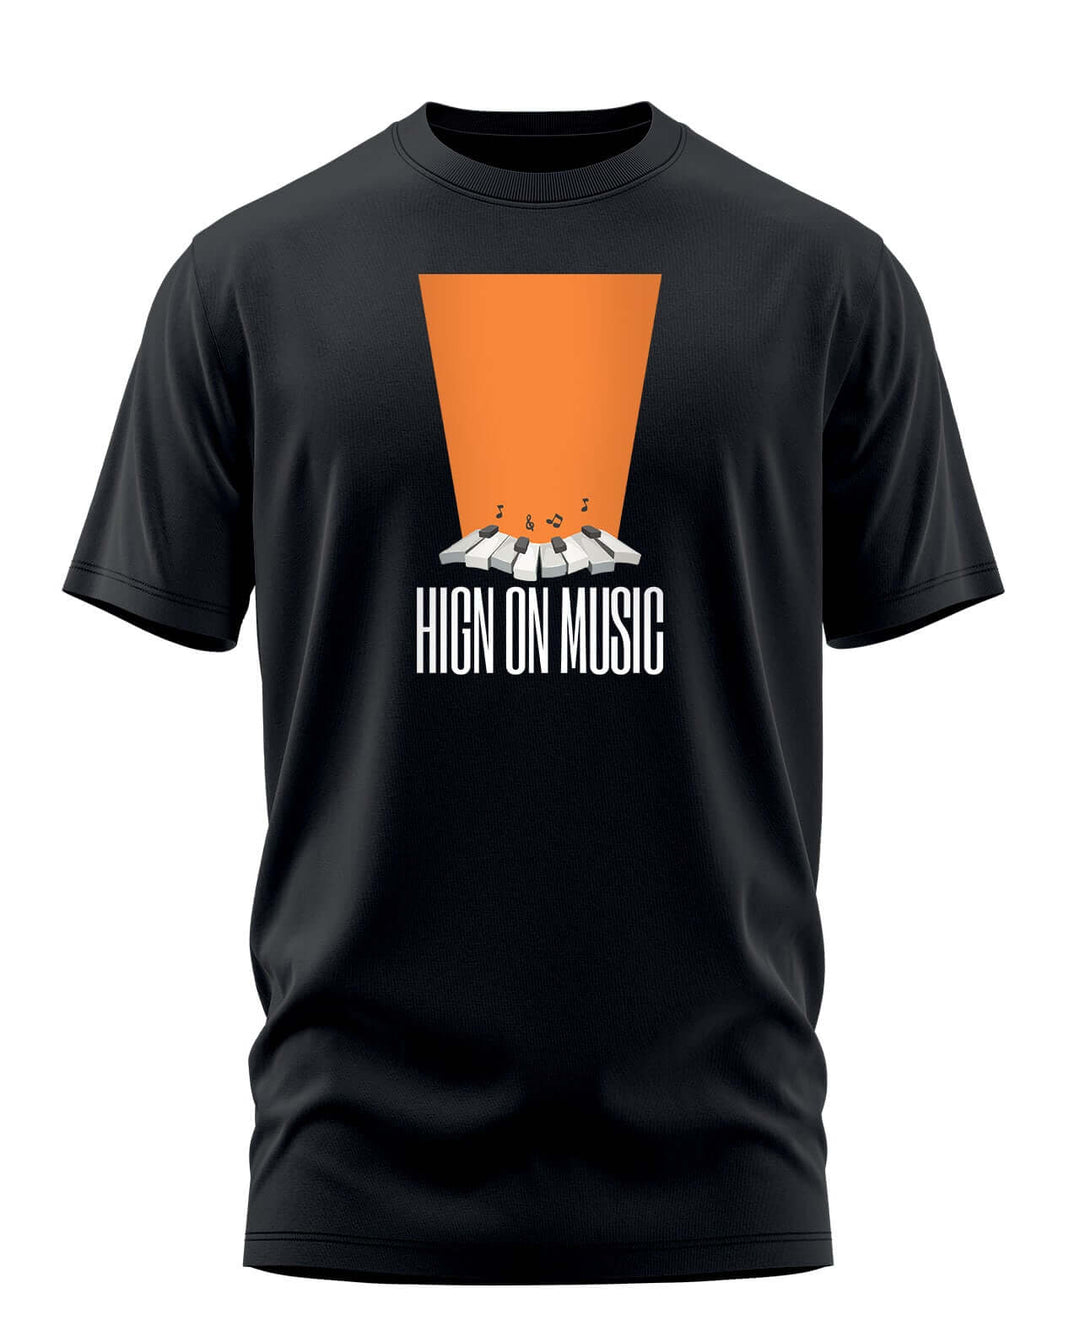 High on music T-shirt